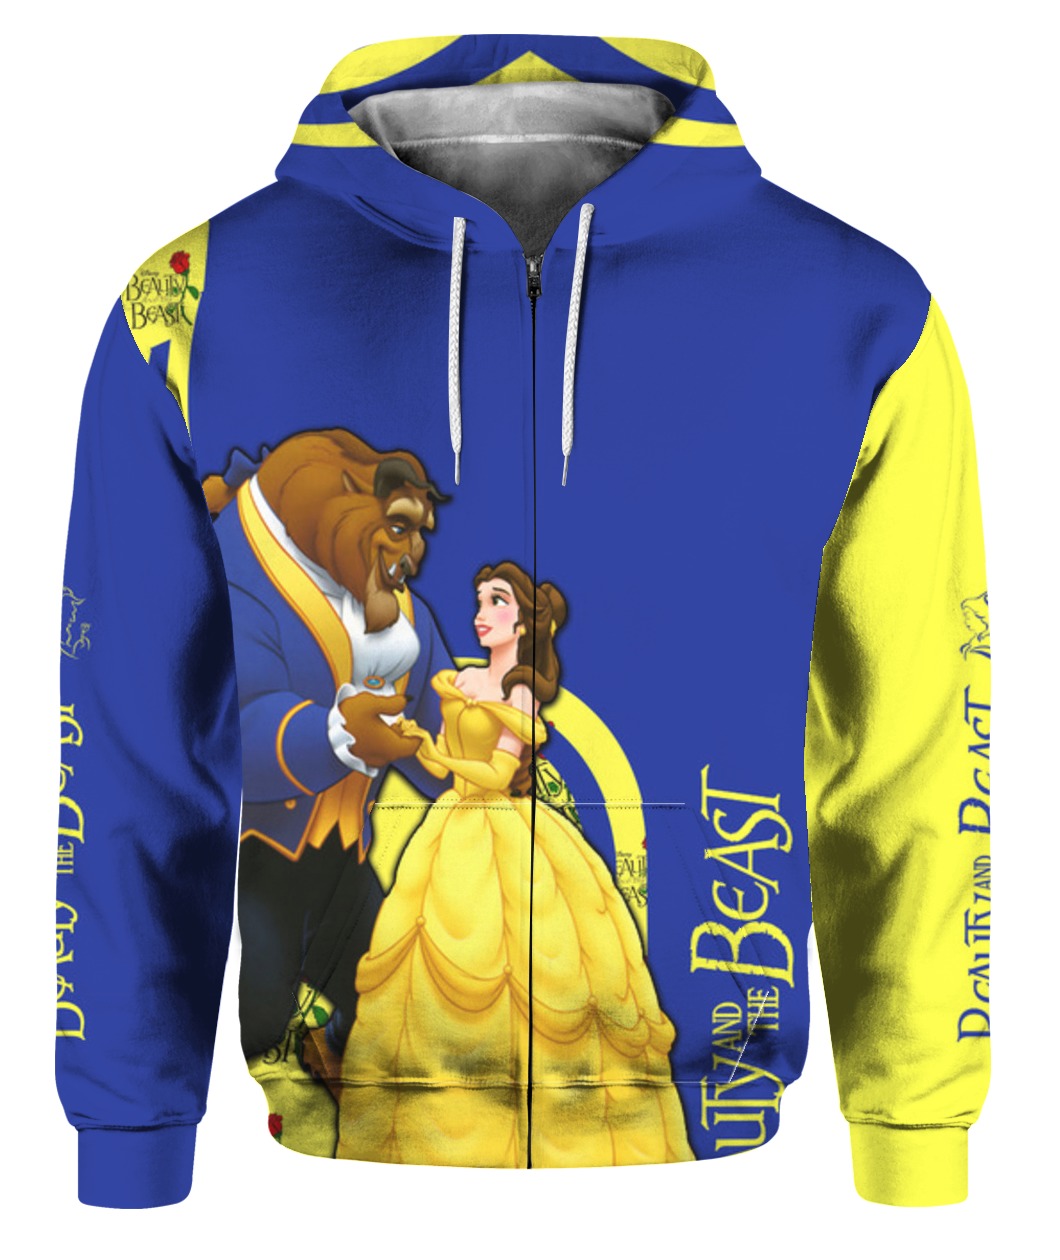 Beauty and the beast full printing zip hoodie 1